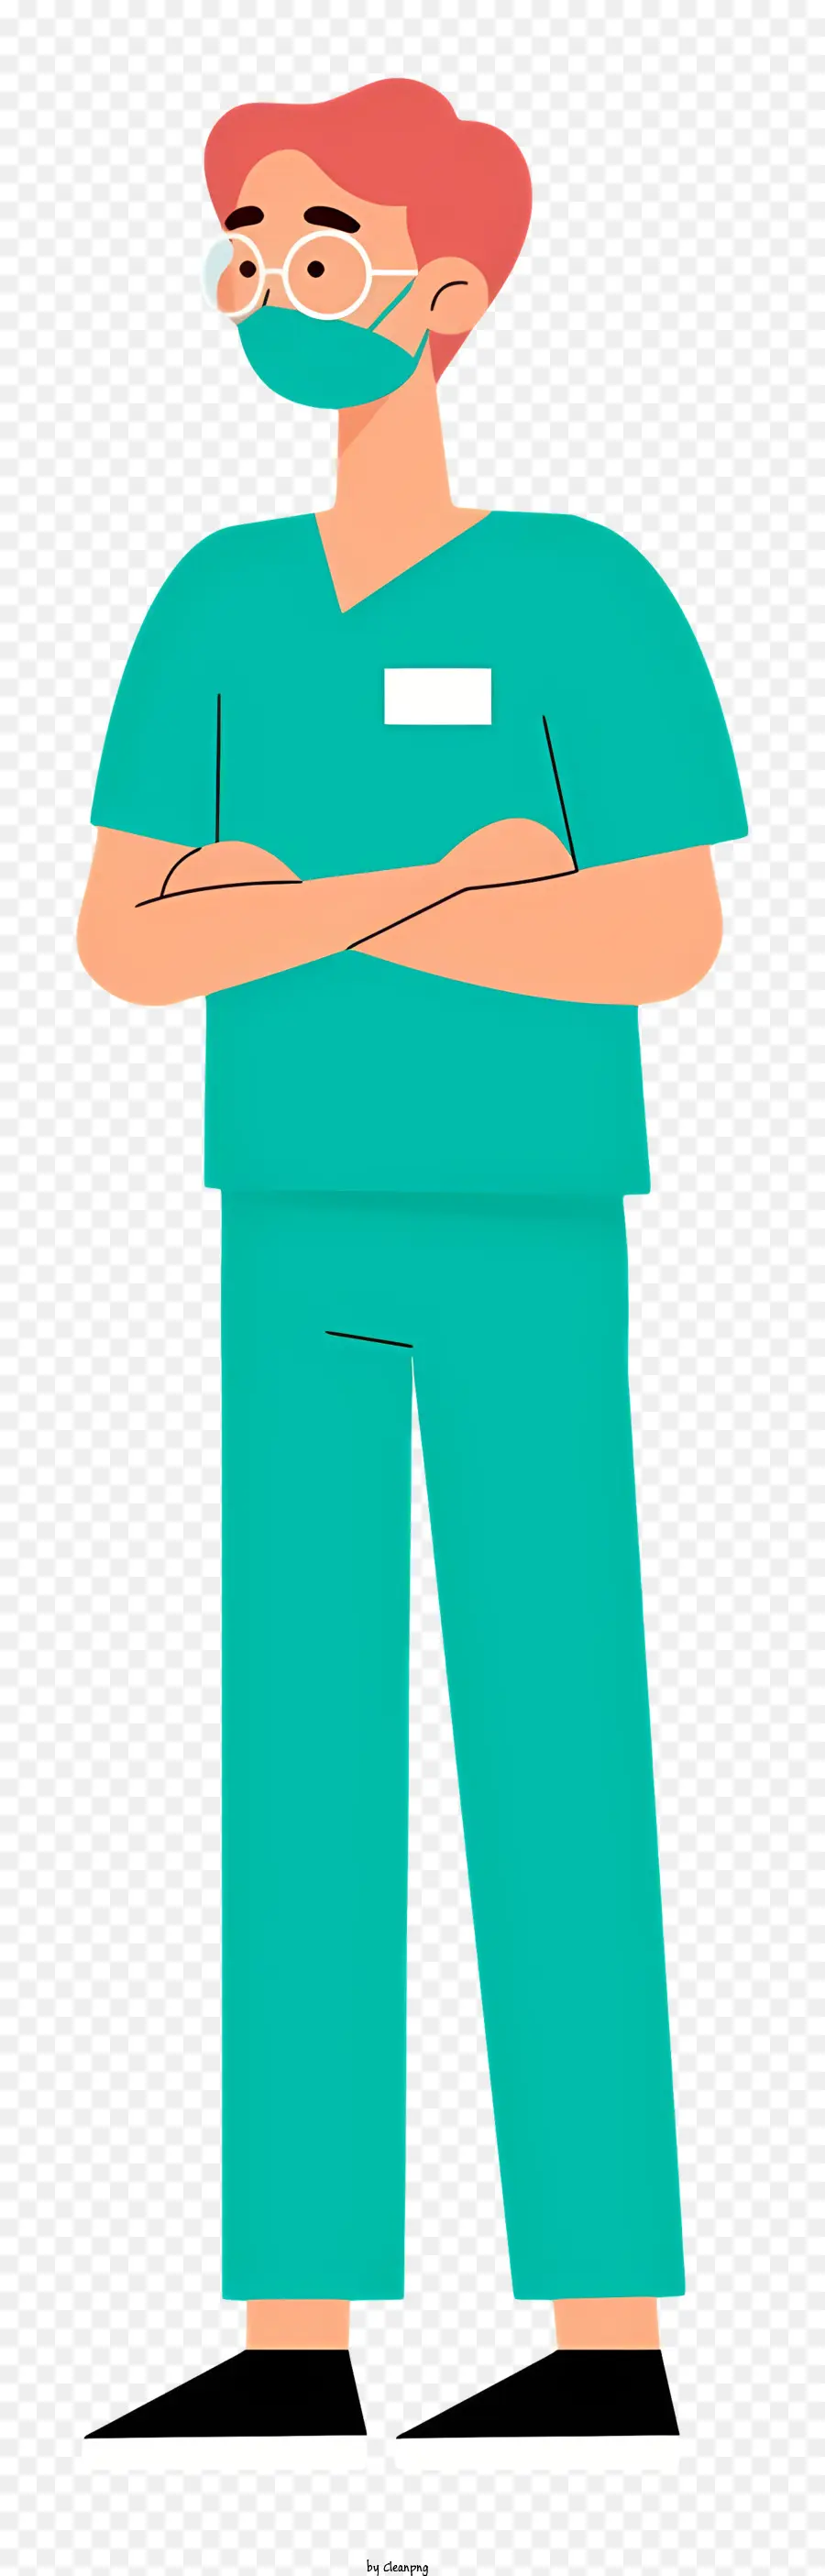 cartoon character green scrubs surgical mask hospital setting clinic setting